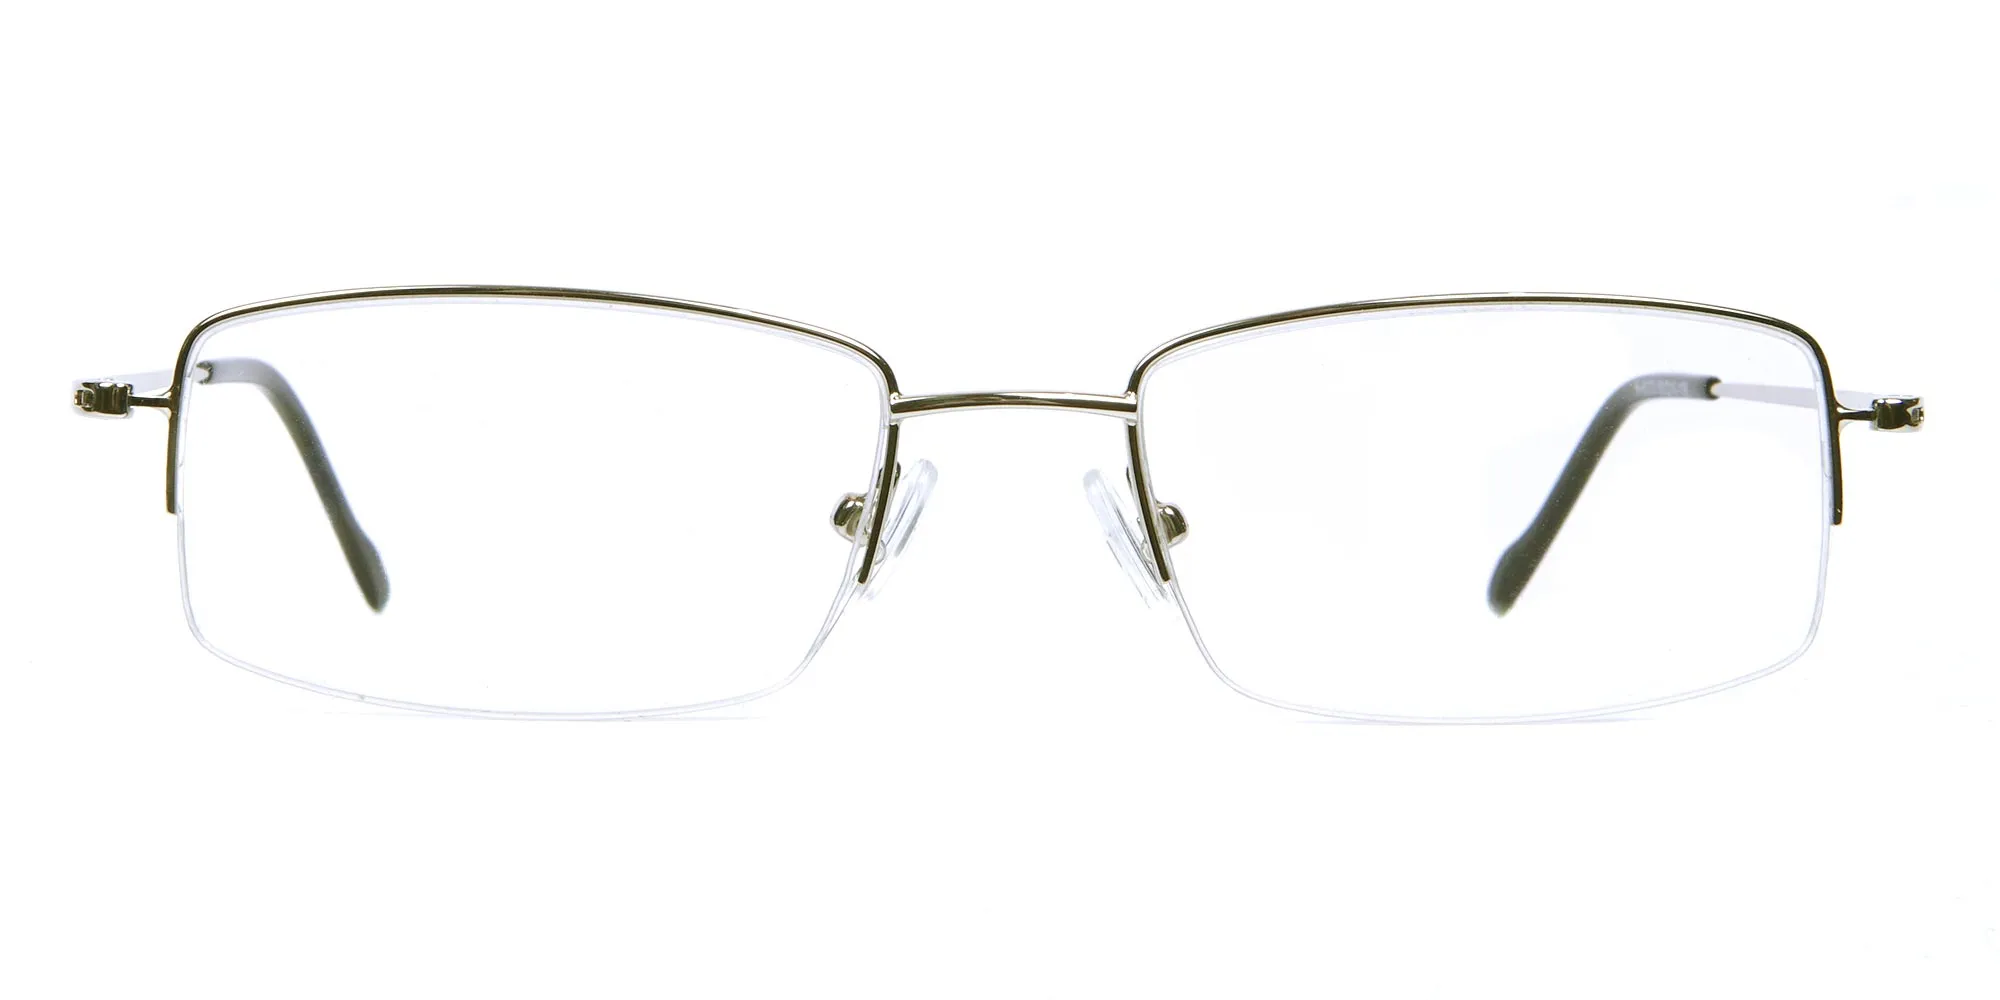 Silver Half-Rim Rectangular Glasses - 2